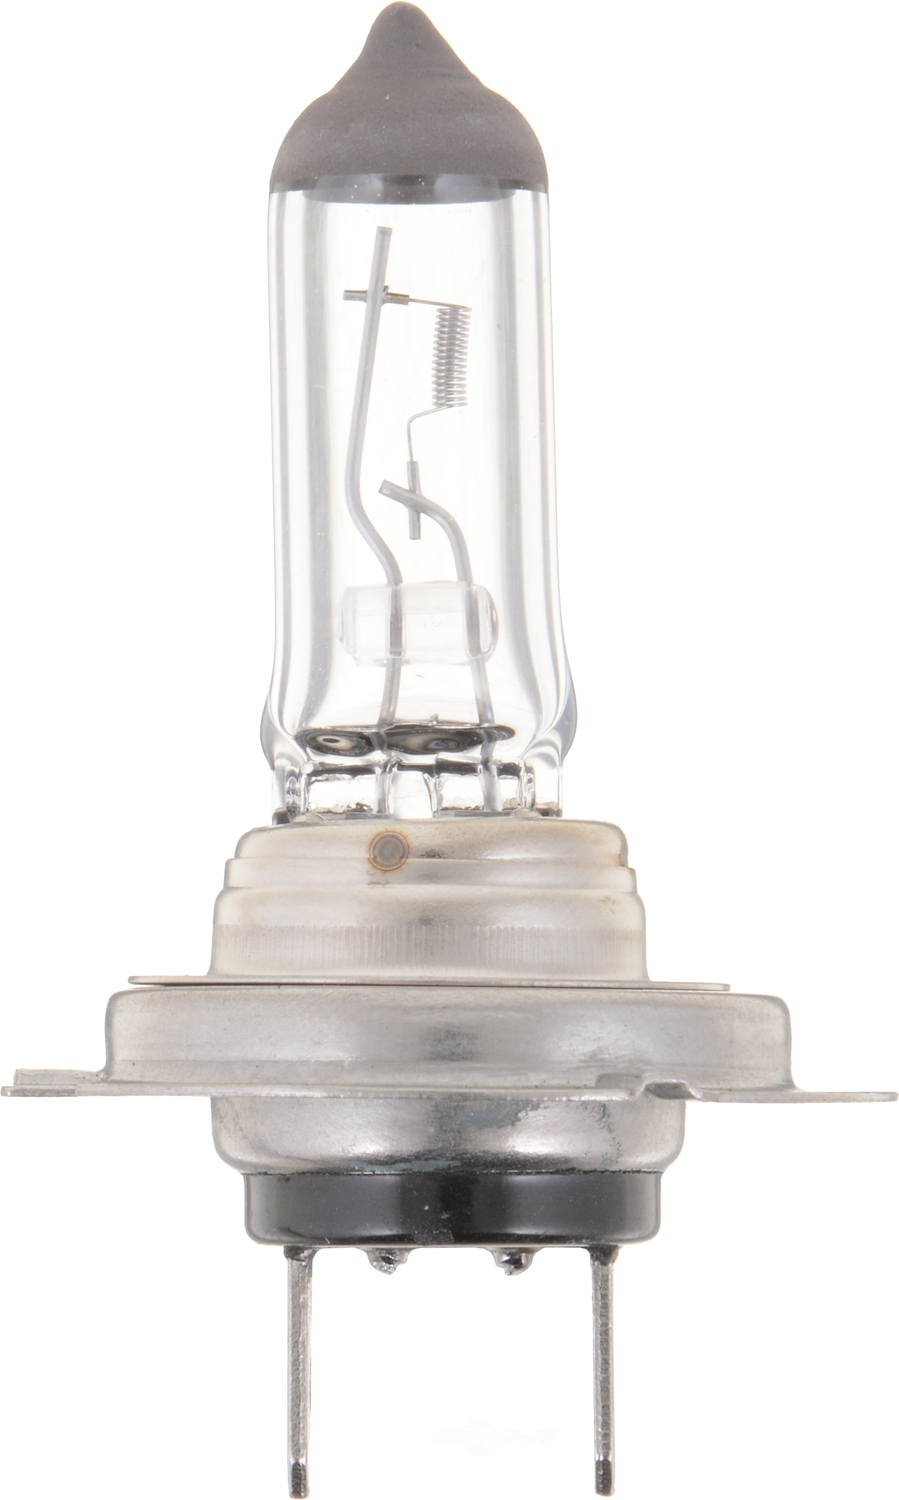 PHILIPS LIGHTING COMPANY - Standard - Single Commercial Pack Cornering Light Bulb - PLP H7C1